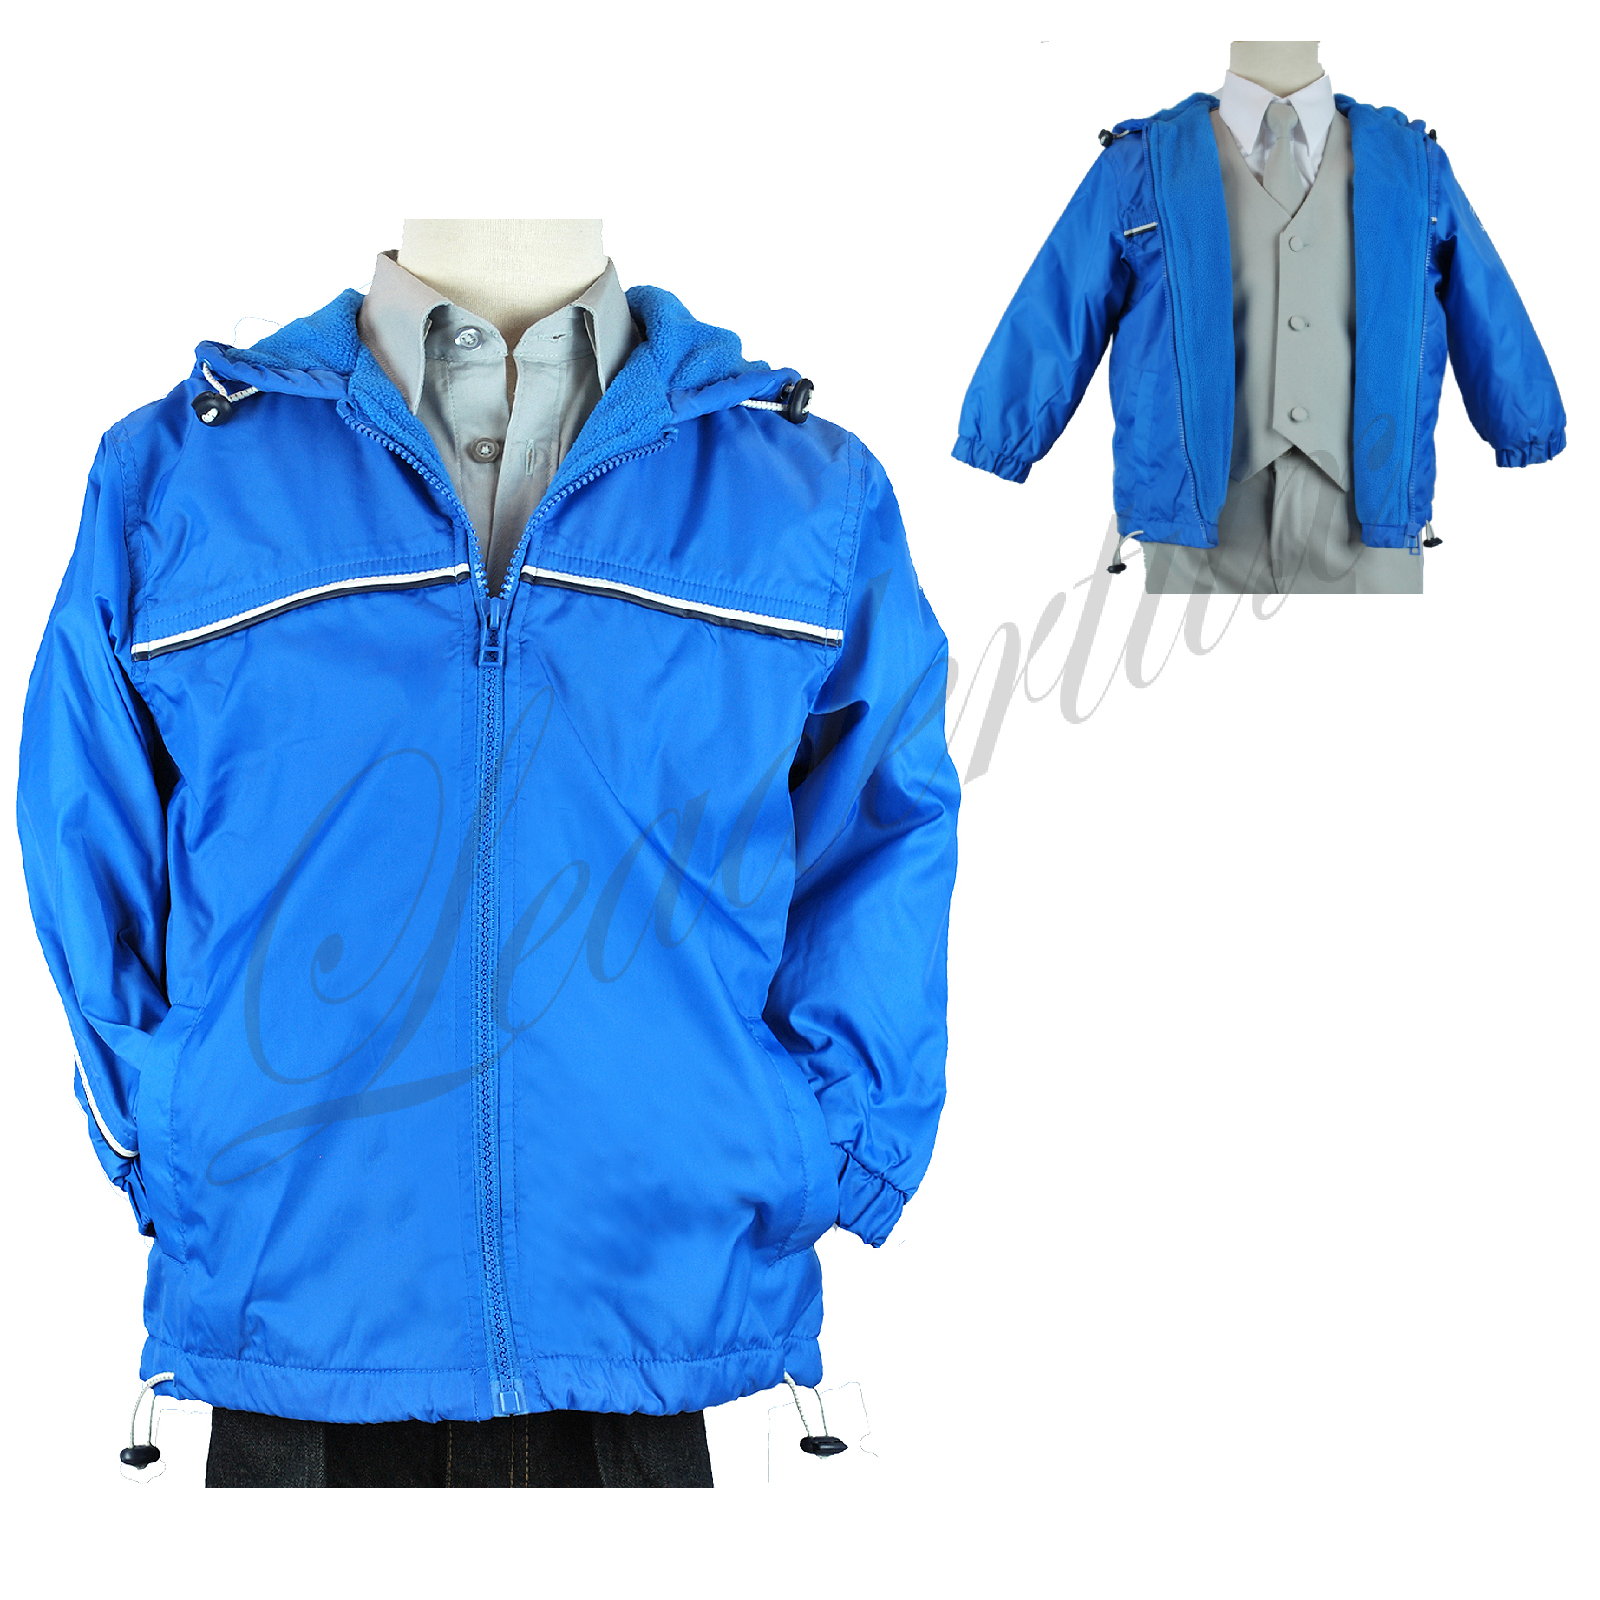 Leadertux NEW 1-6 years old Baby Child Kid Toddler Cozy Fleece Boy Blue Hooded Windbreaker Jacket Coat